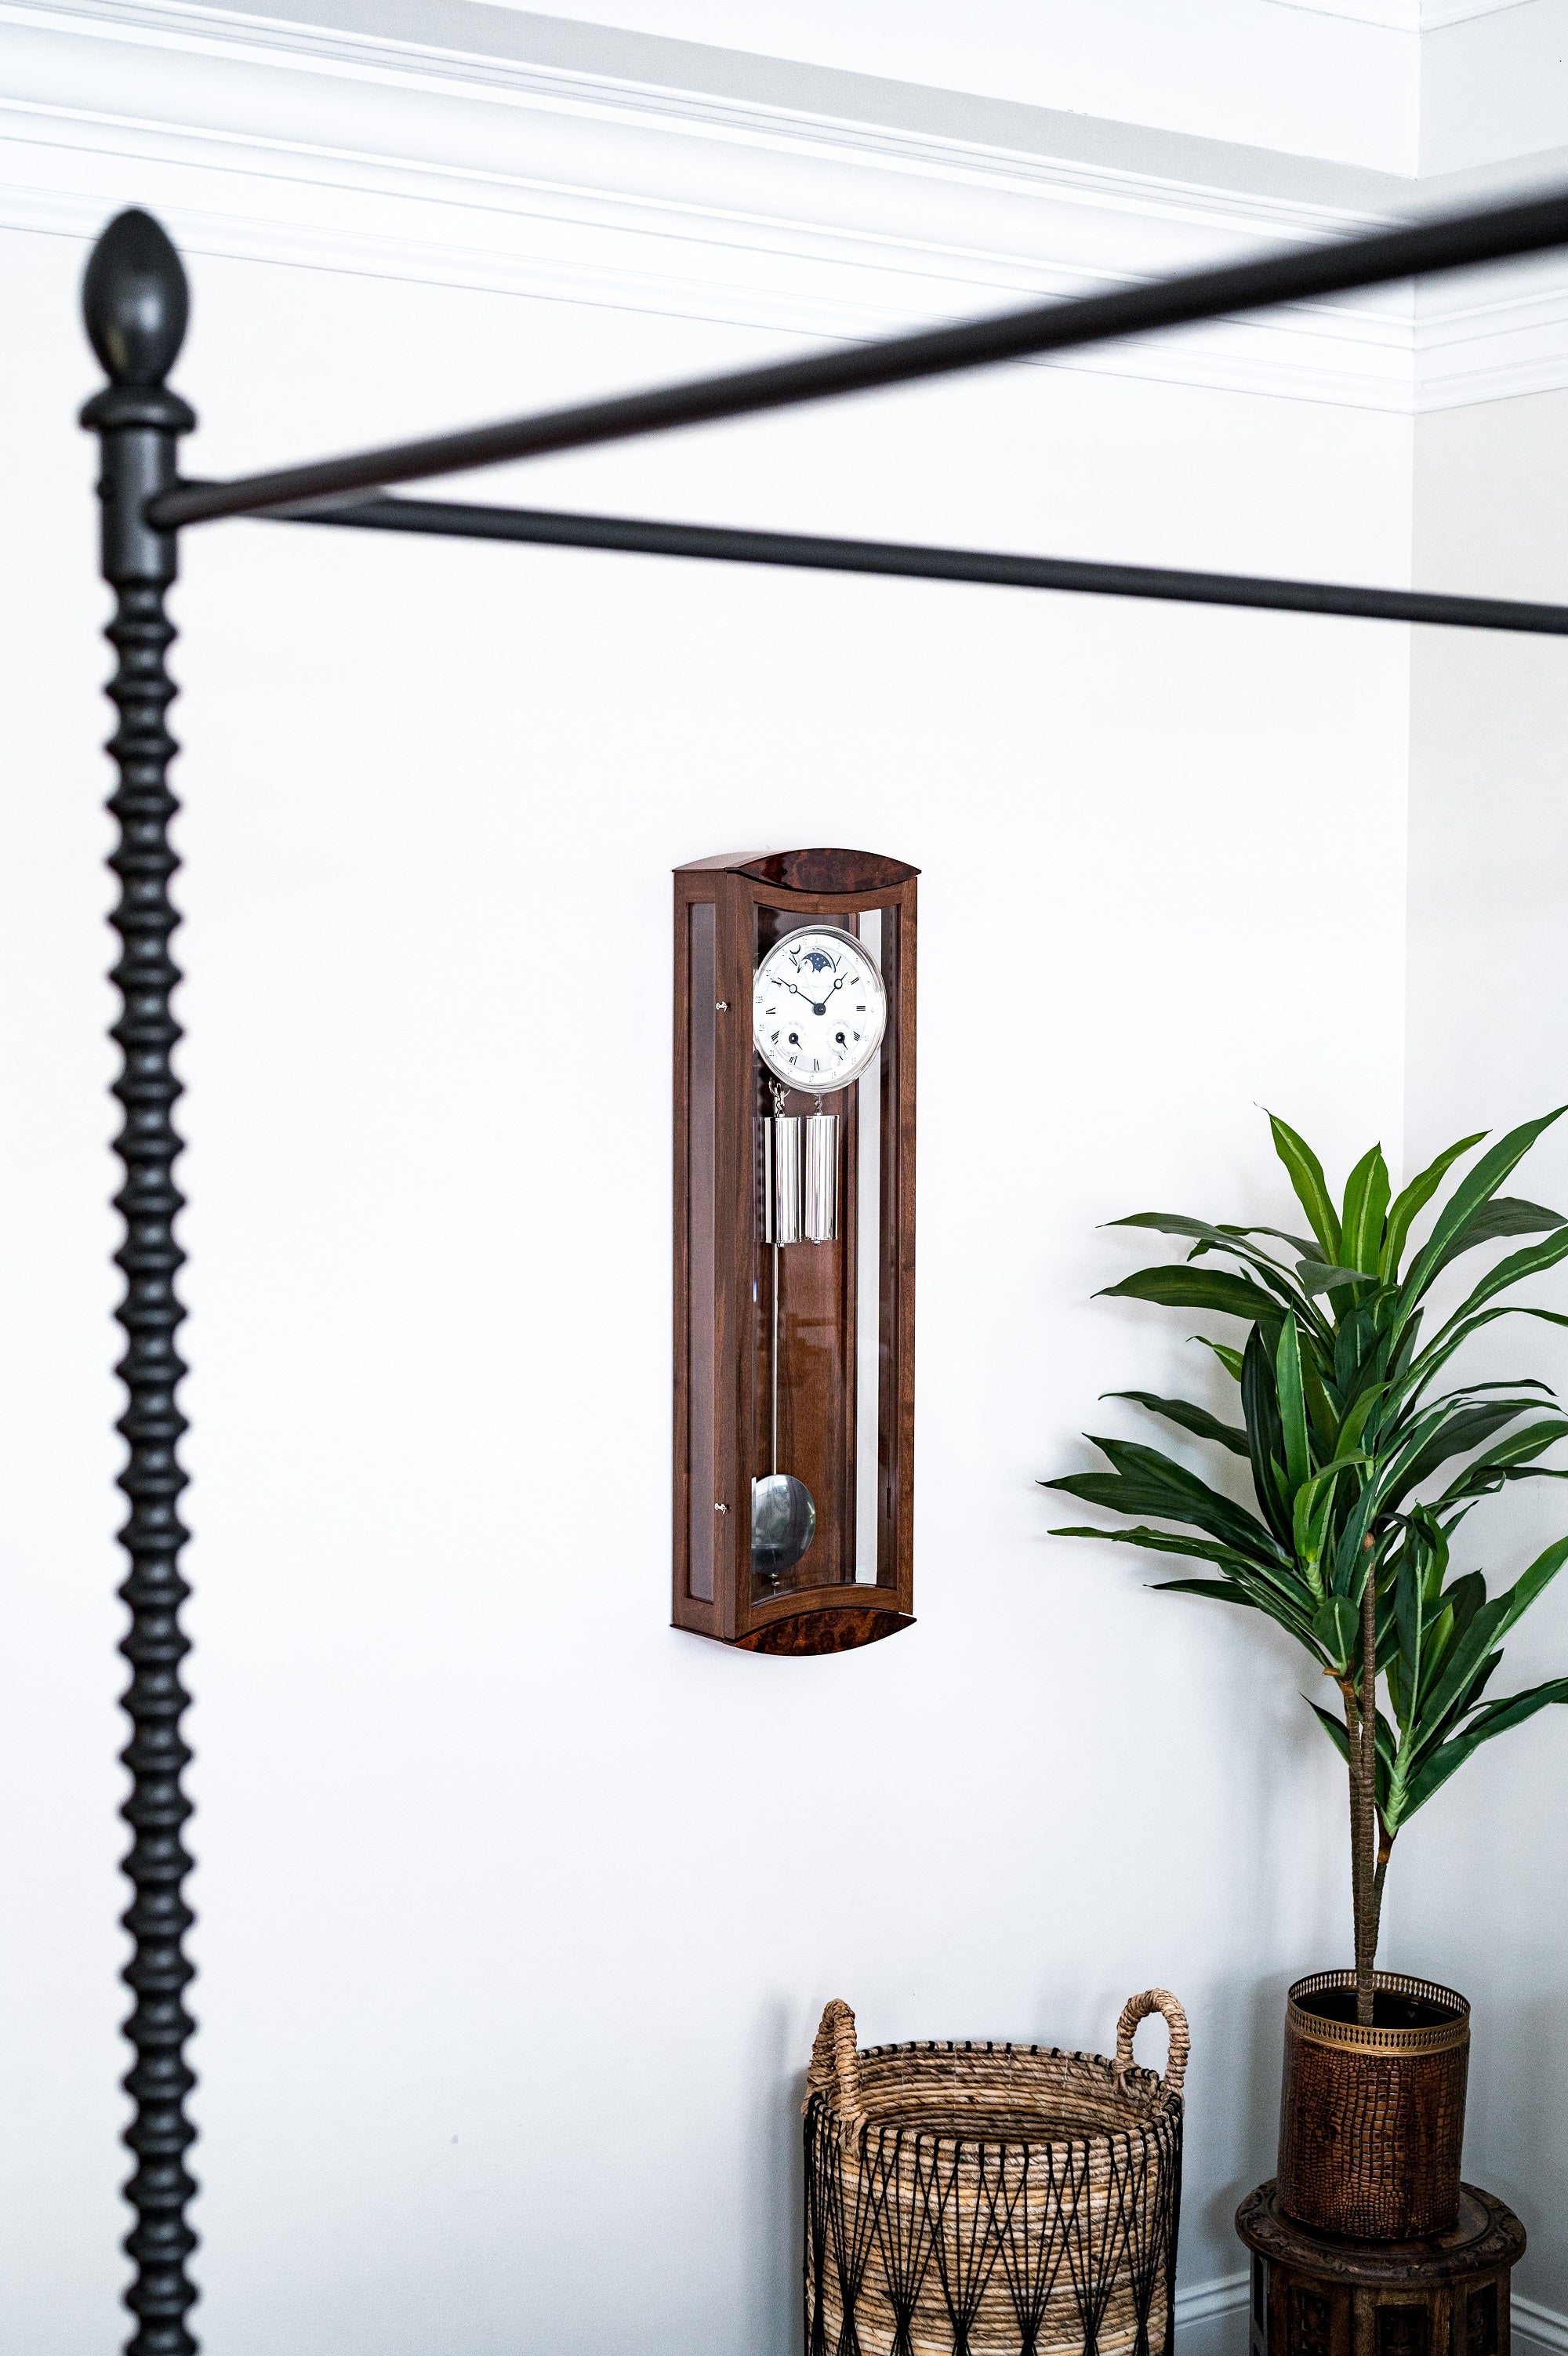 Pendulum regulator wall clock with an iced beech wooden finish hangs on a white wall beside windows and green plants